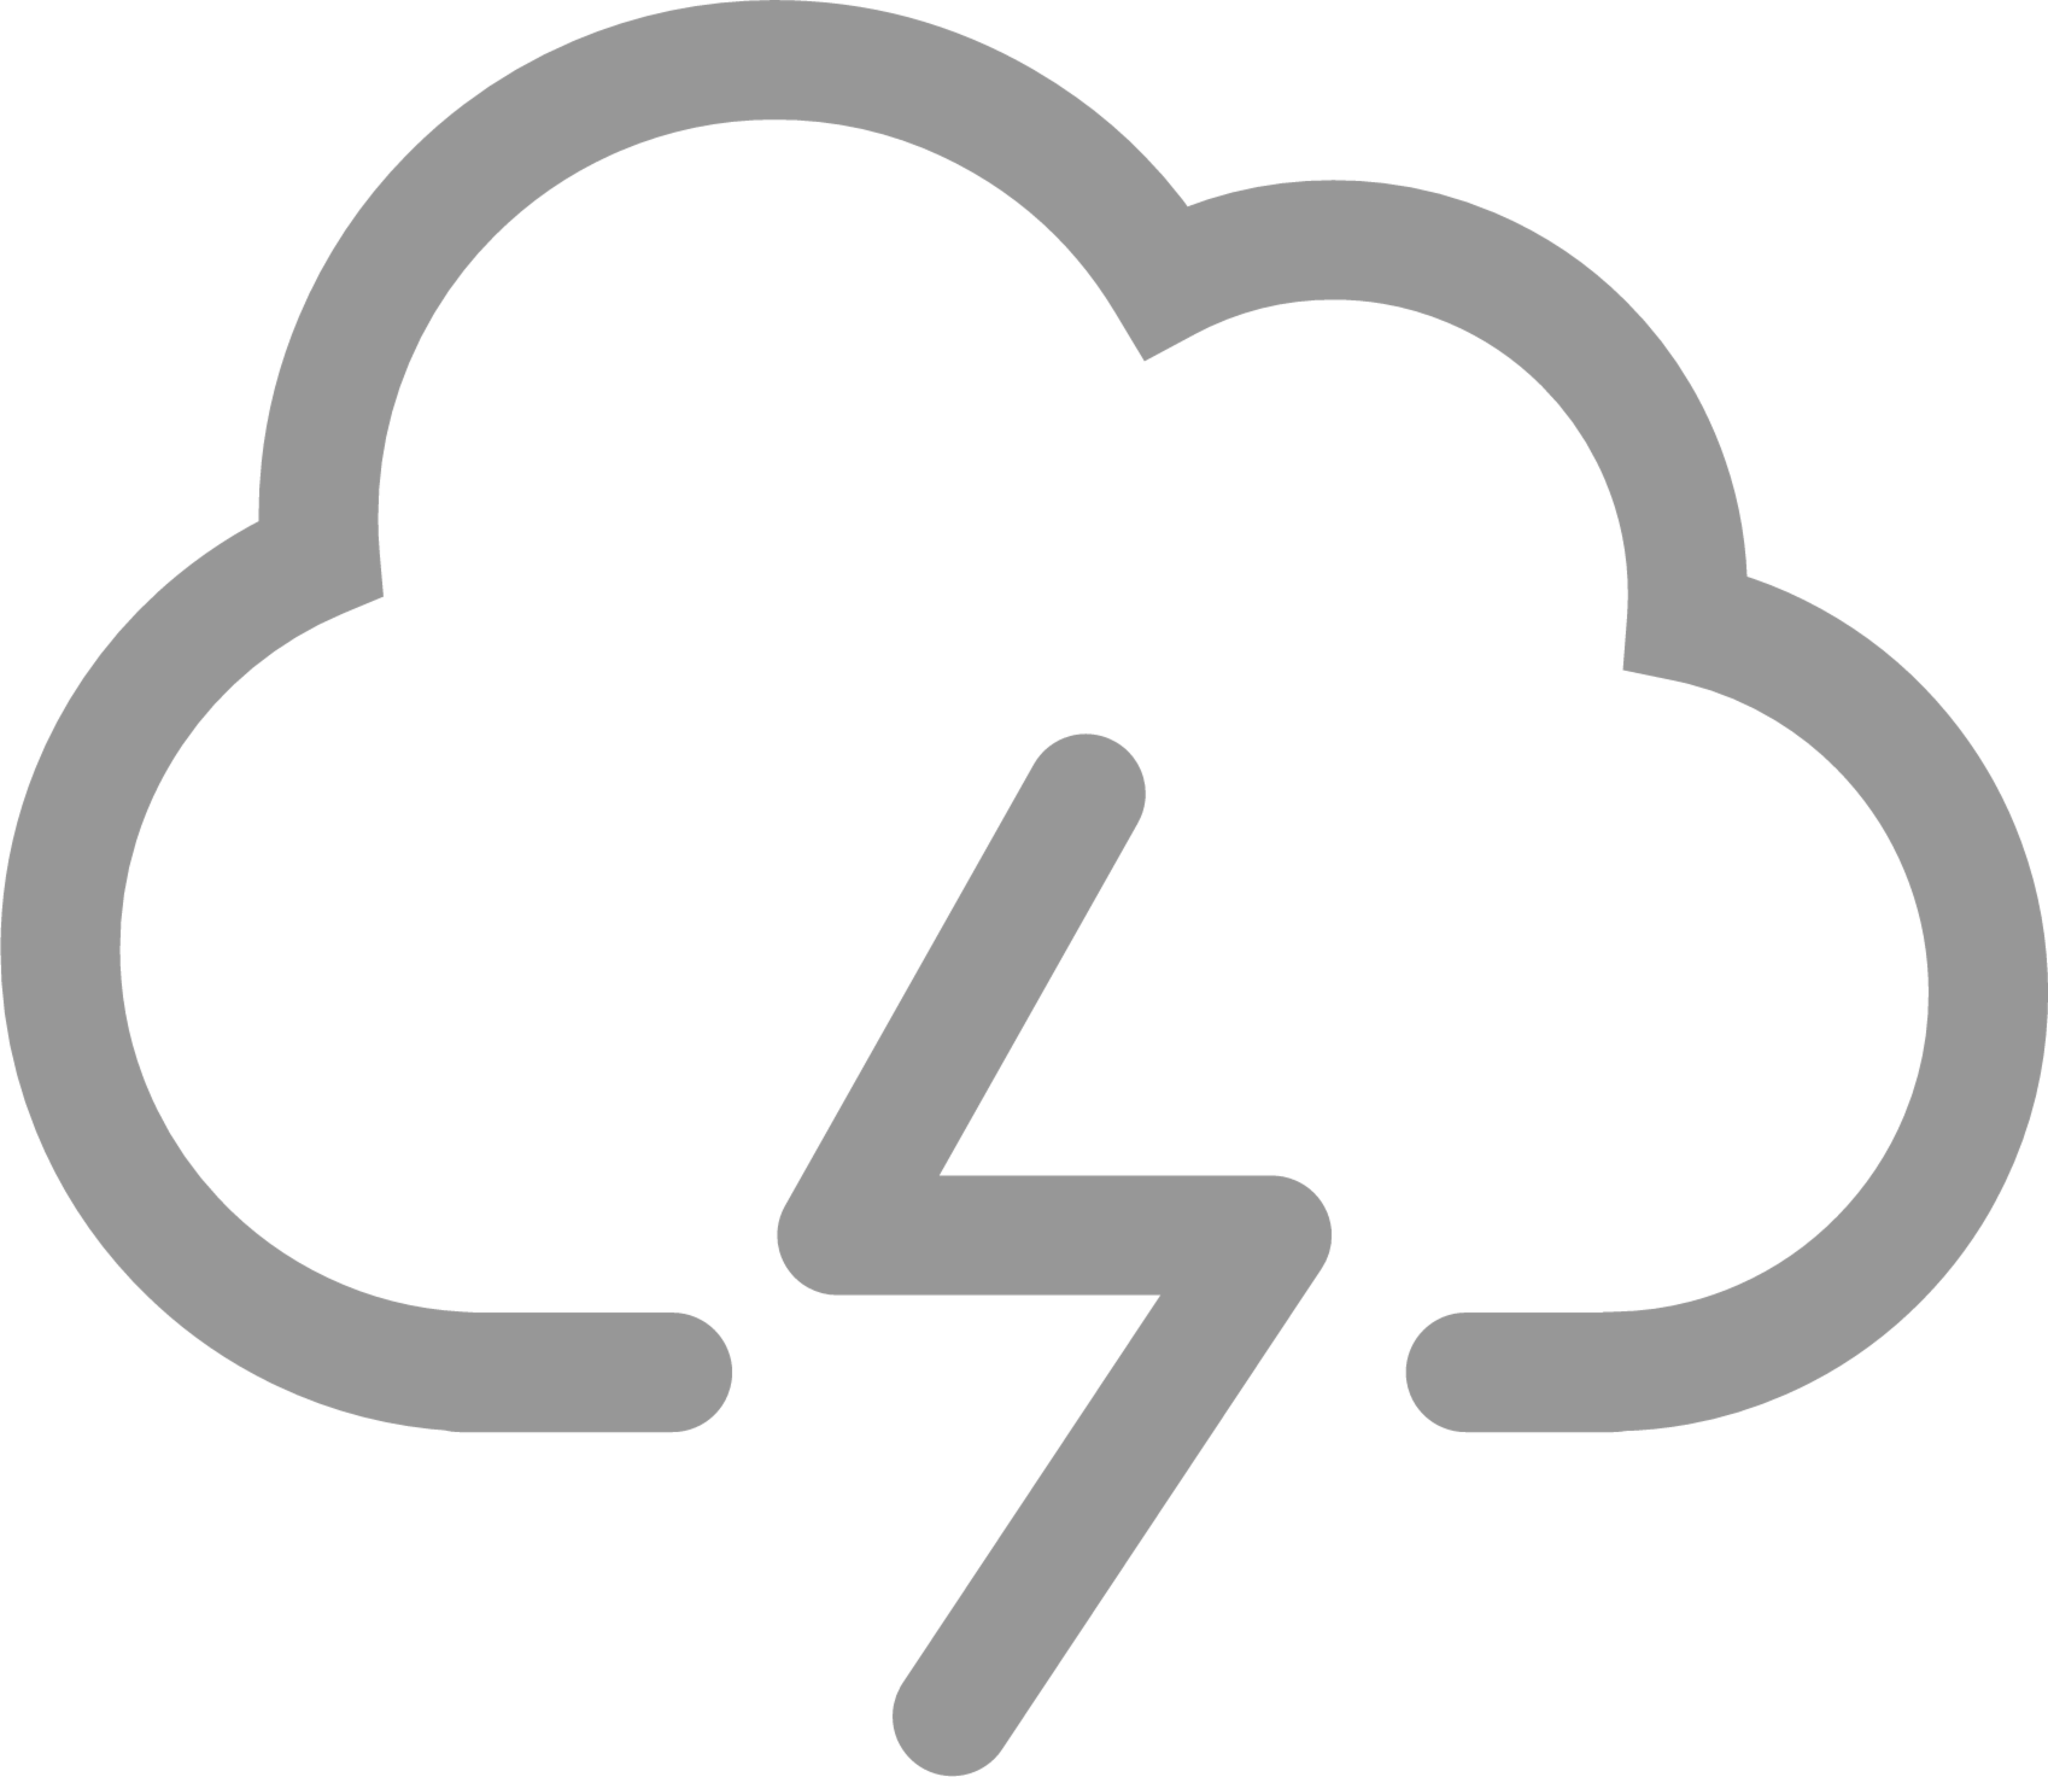 cloudLightning icon